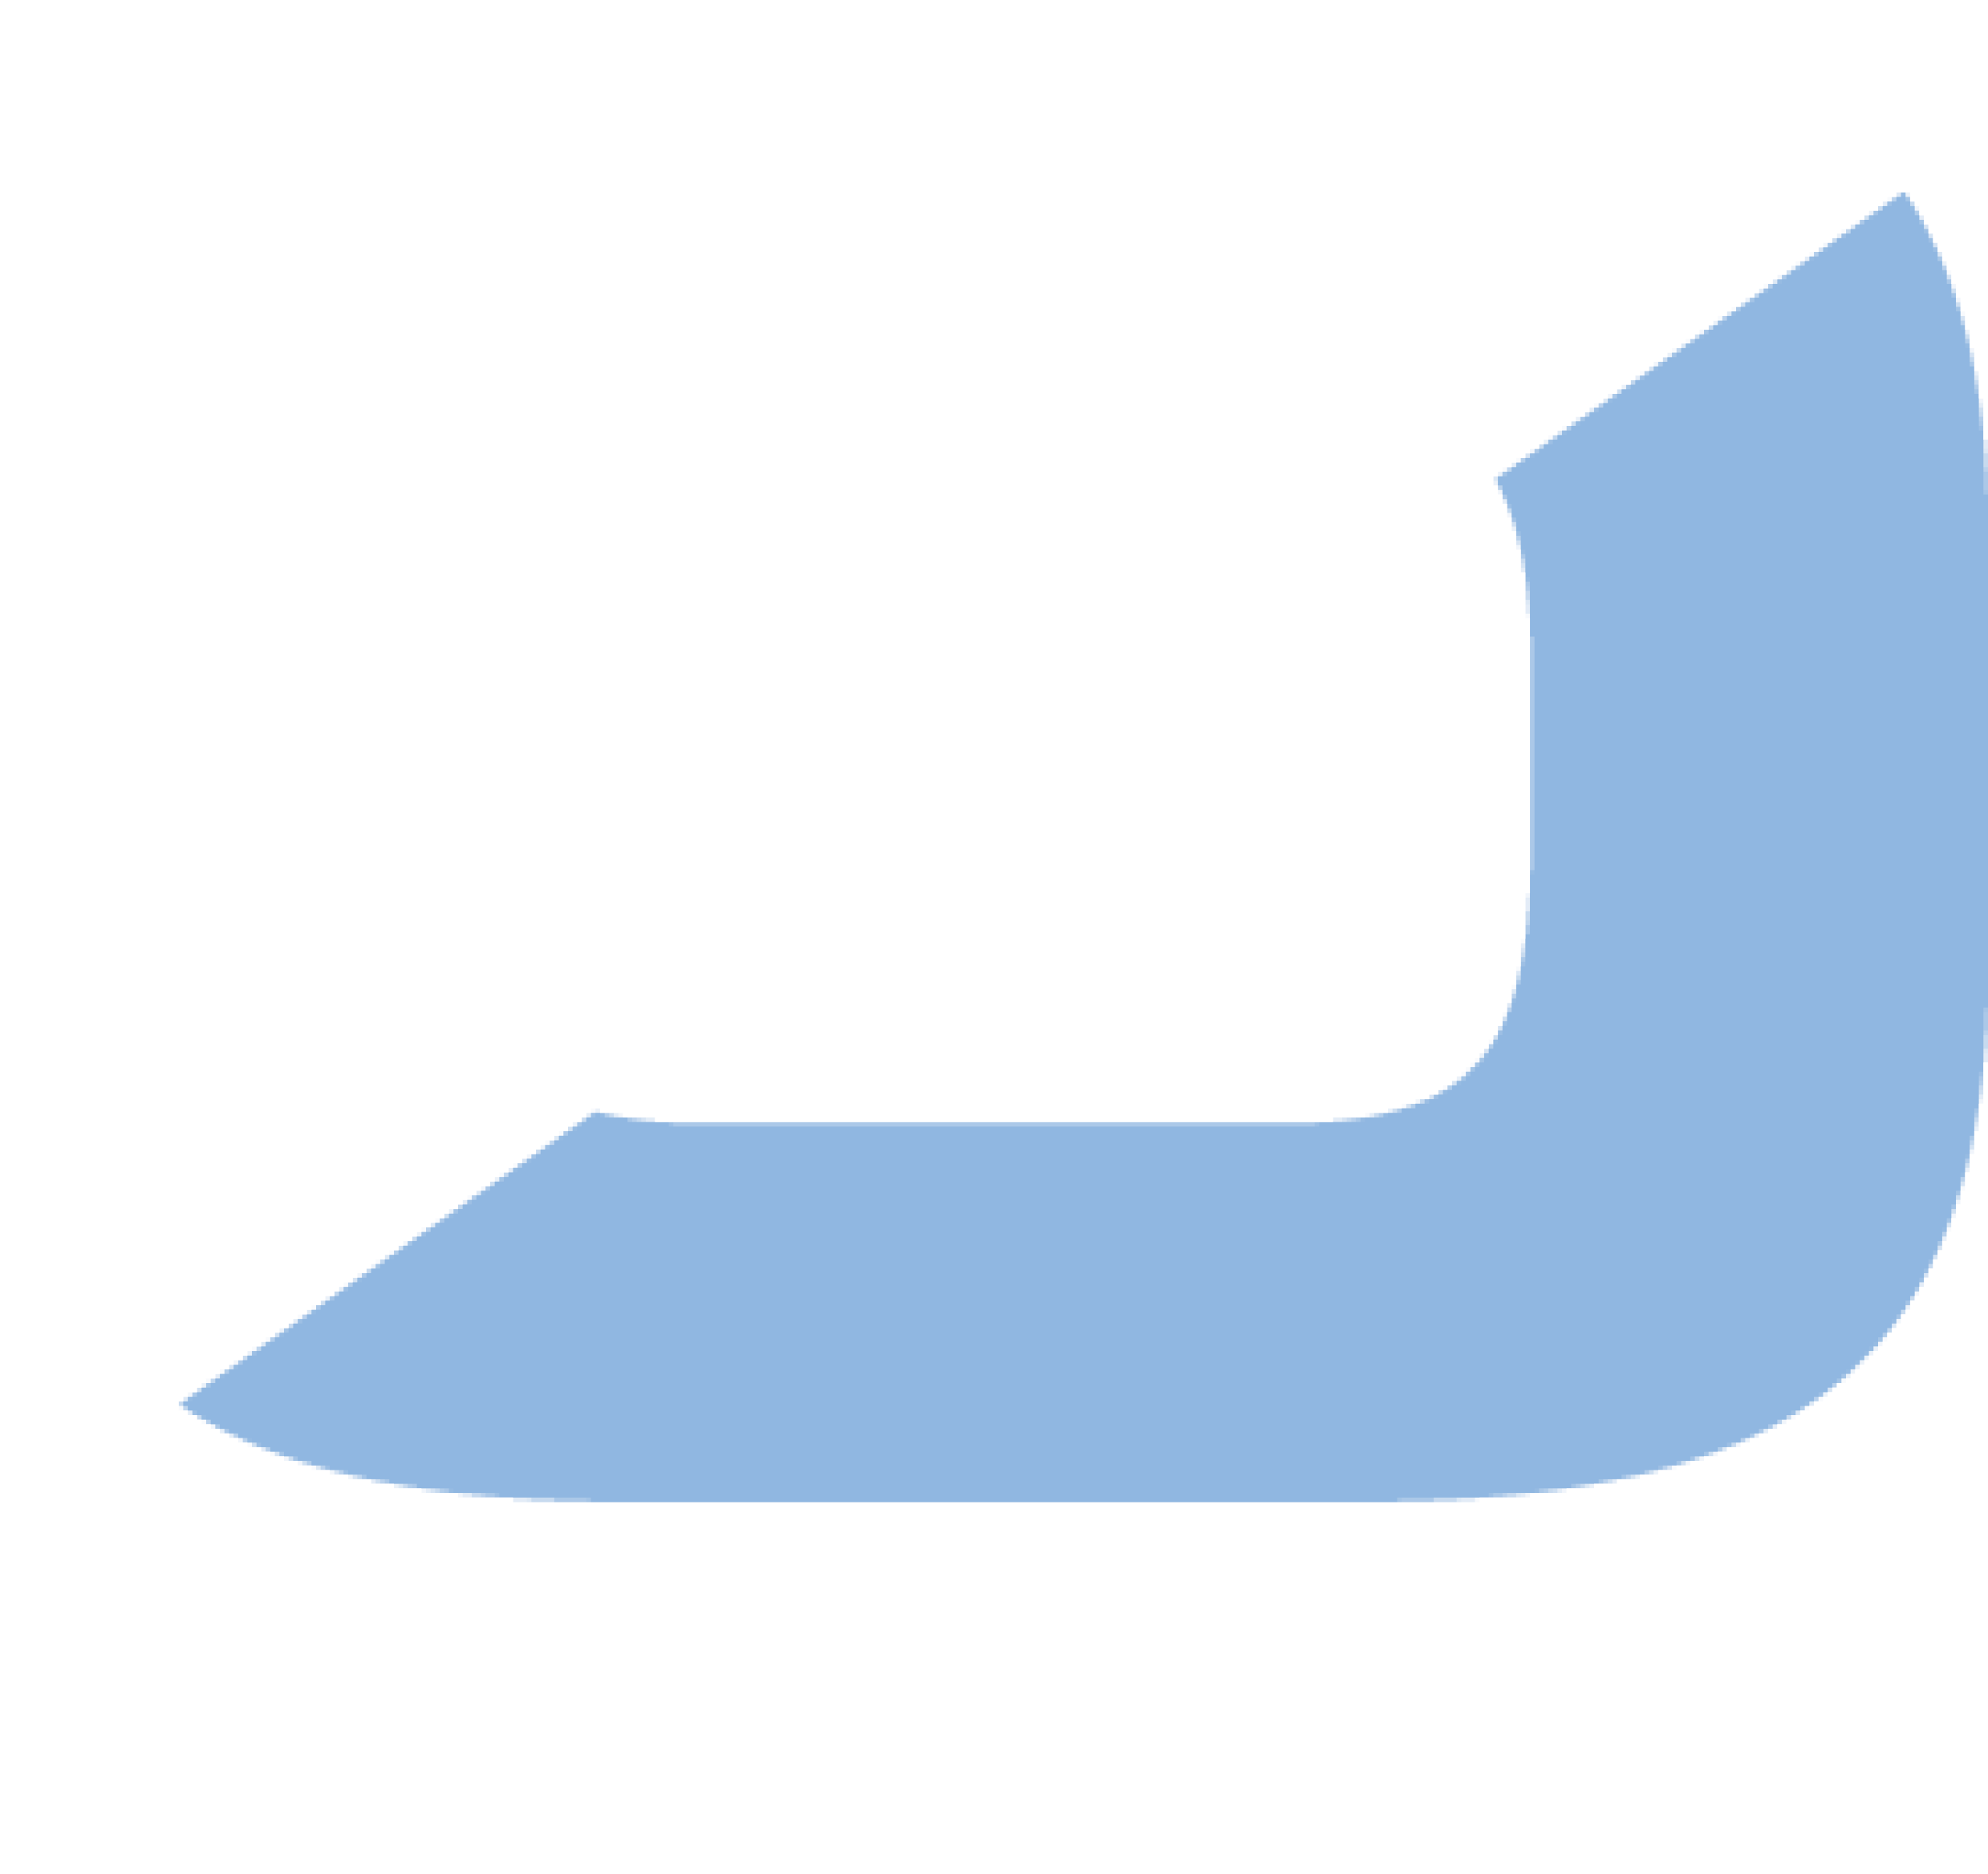 FootballOlogo_navy